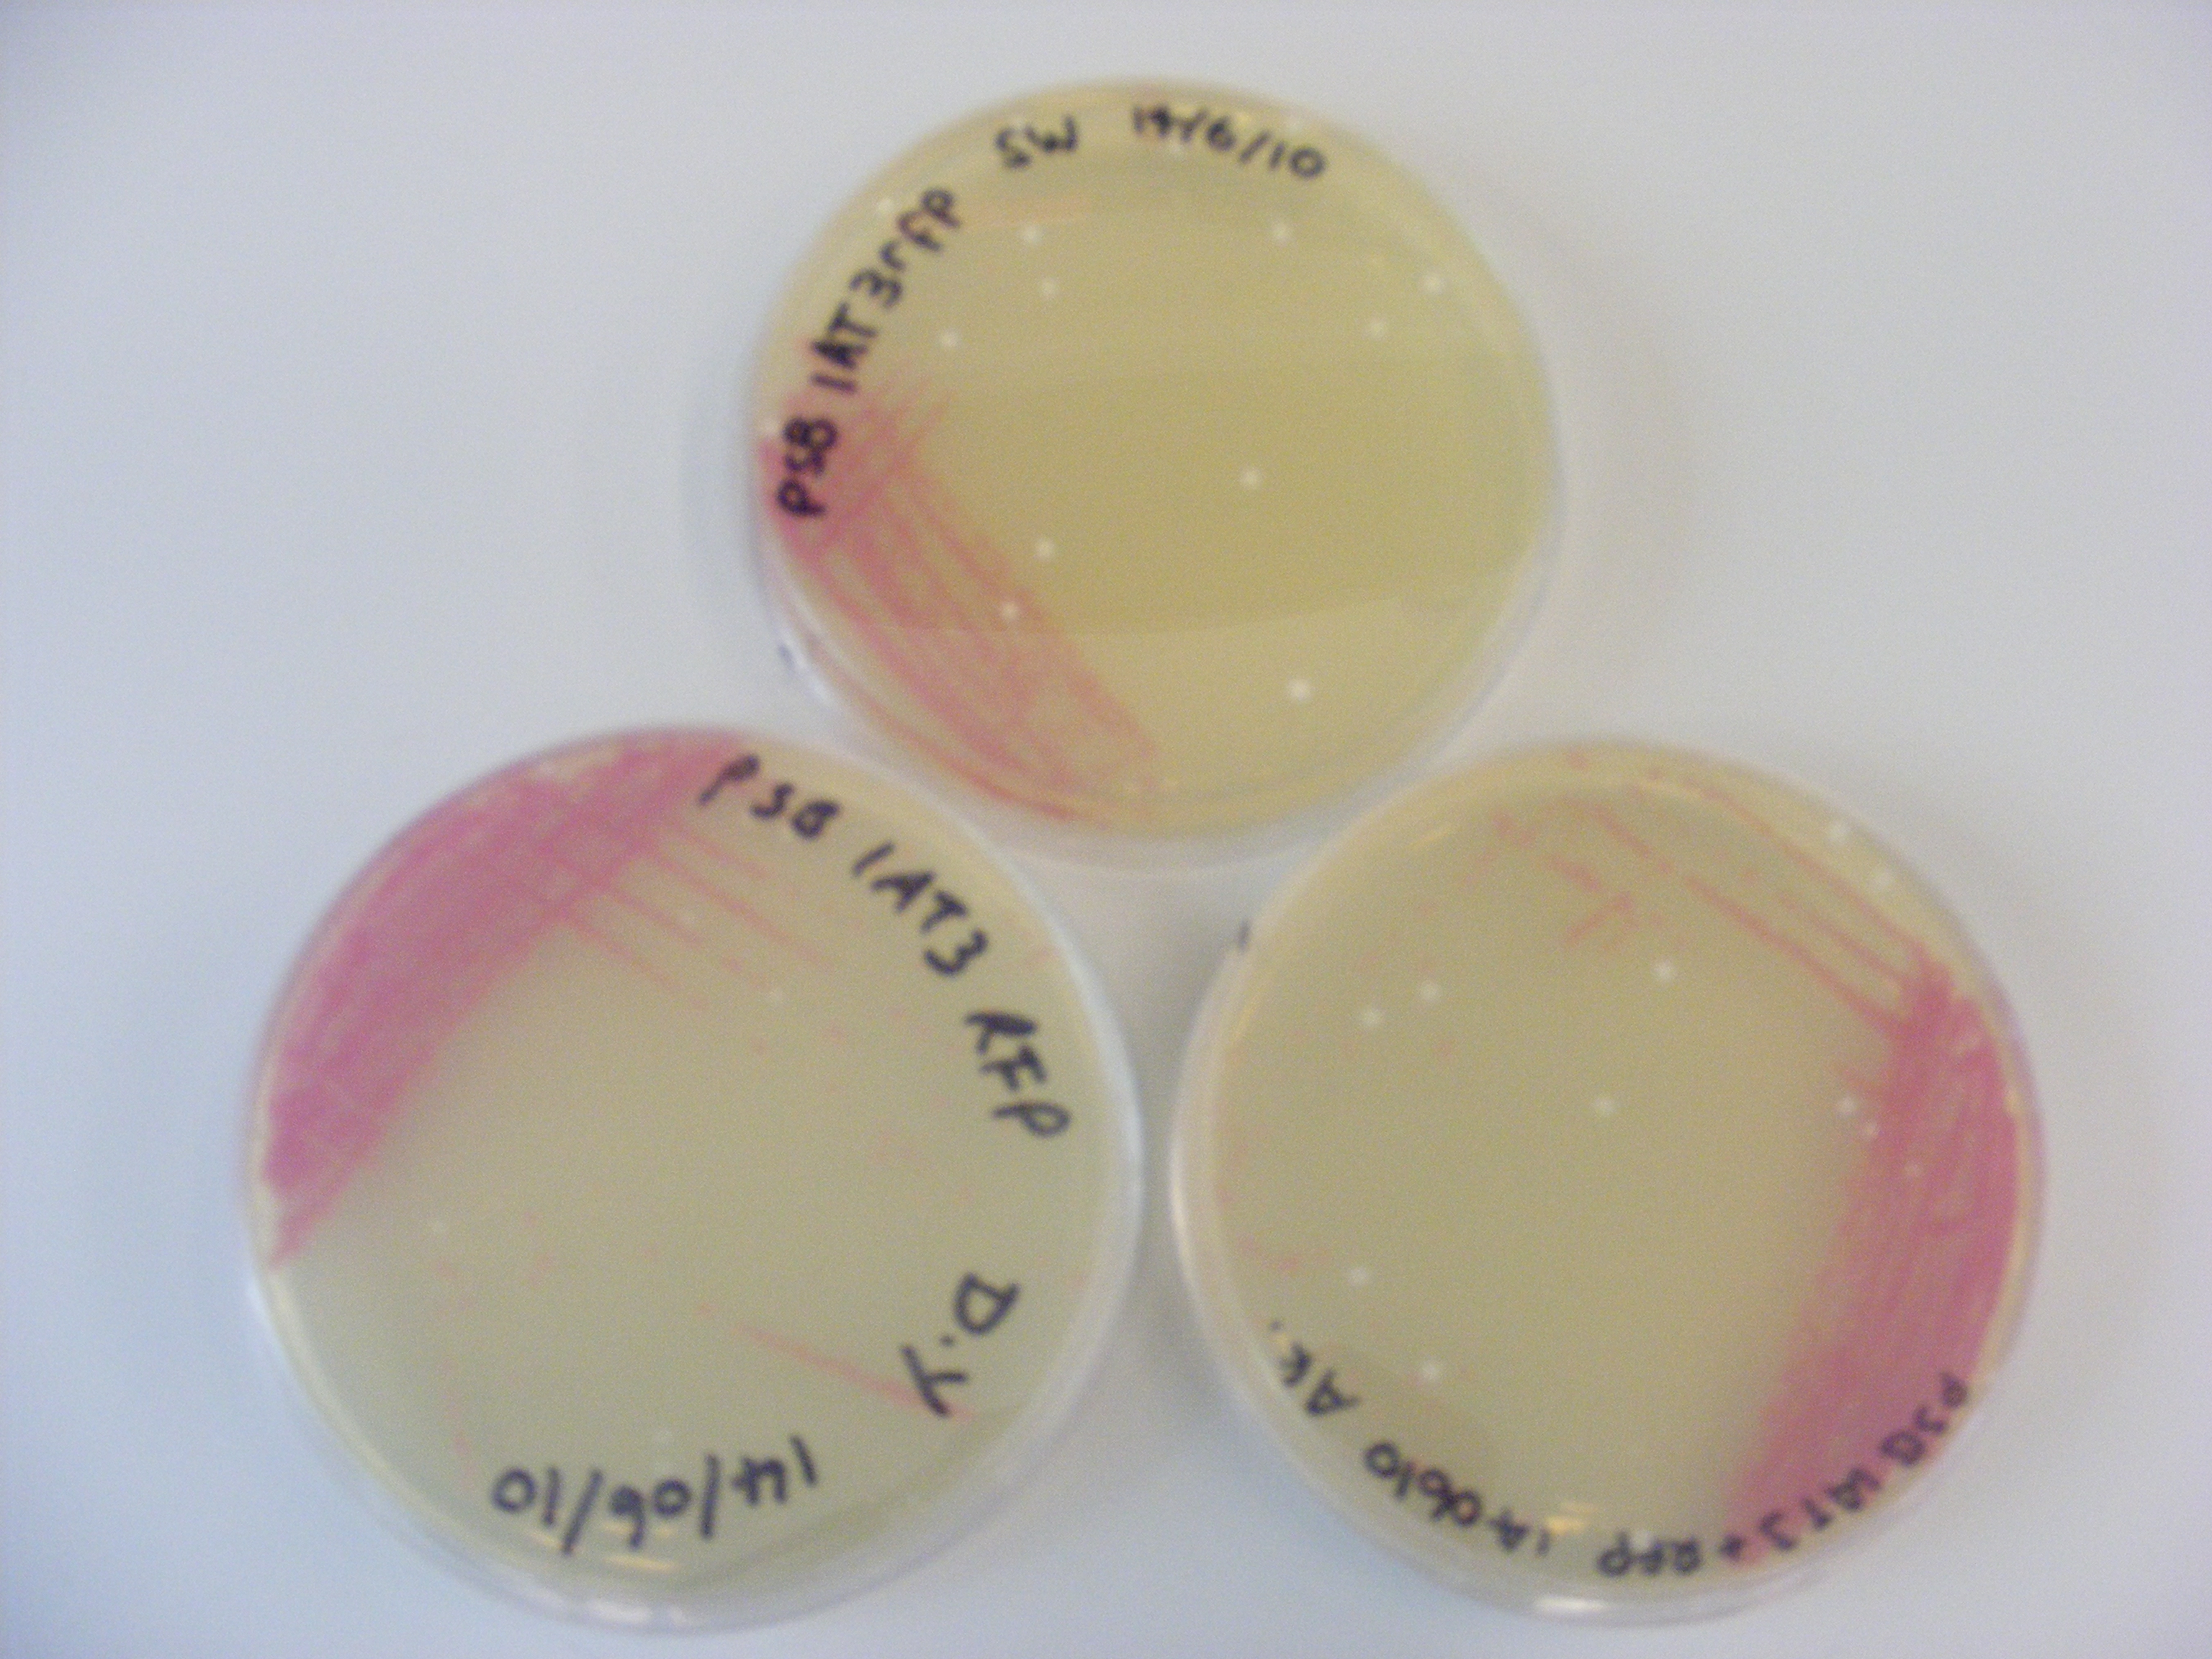 Streak plating of E. coli DH5α cells